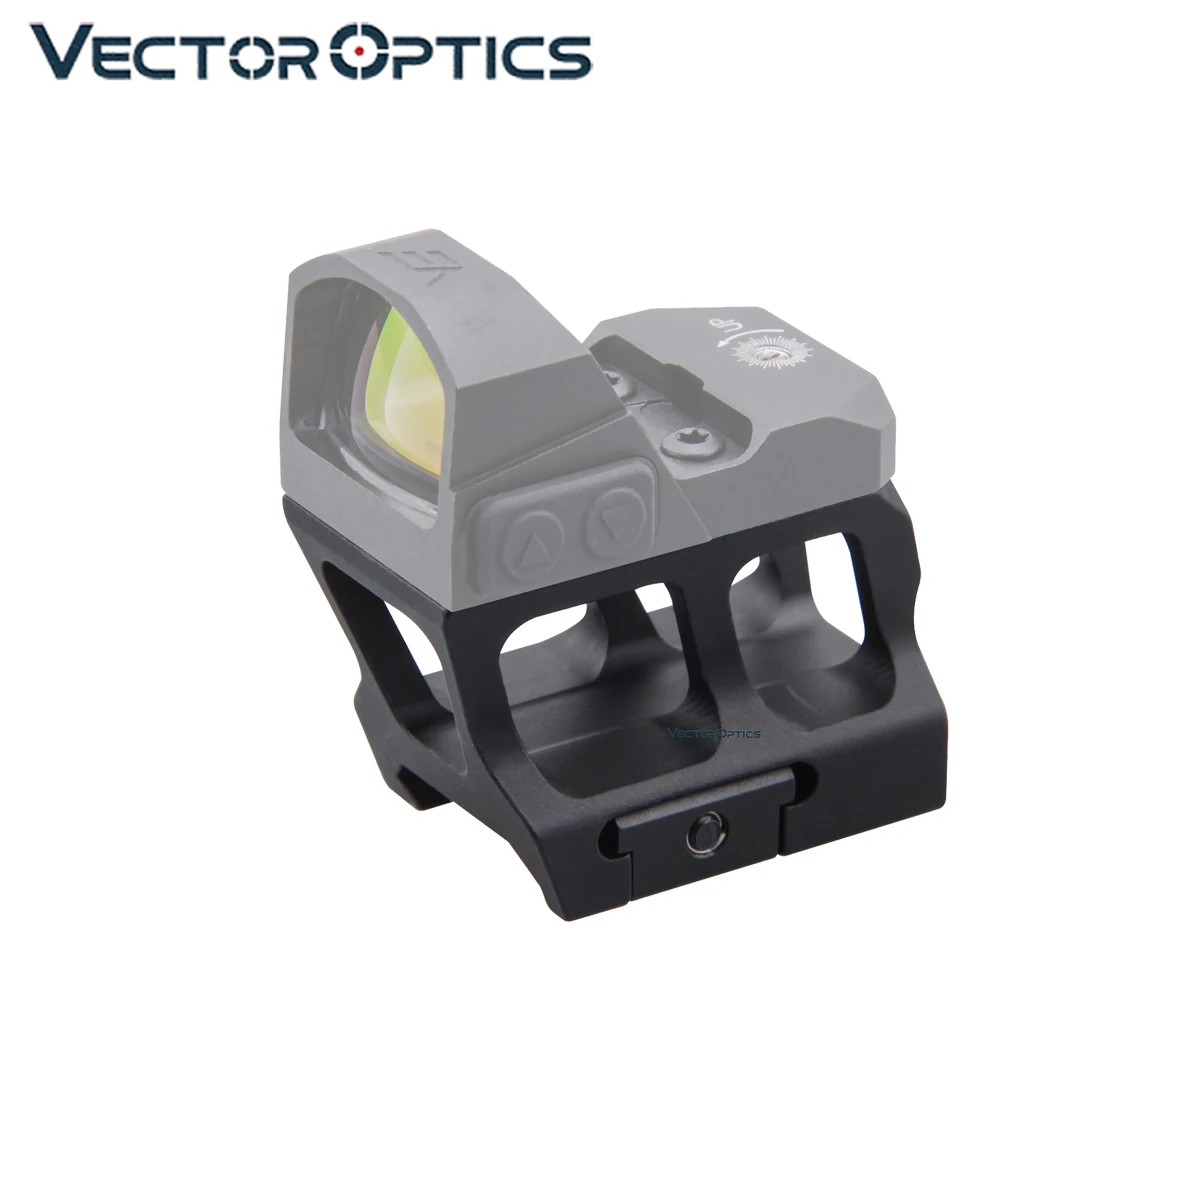 Vector Optics TEK Red Dot Sight Cantilever Picatinny Riser Mount Lower 1/3 Co-witness Fit SCRD-19II/35/40